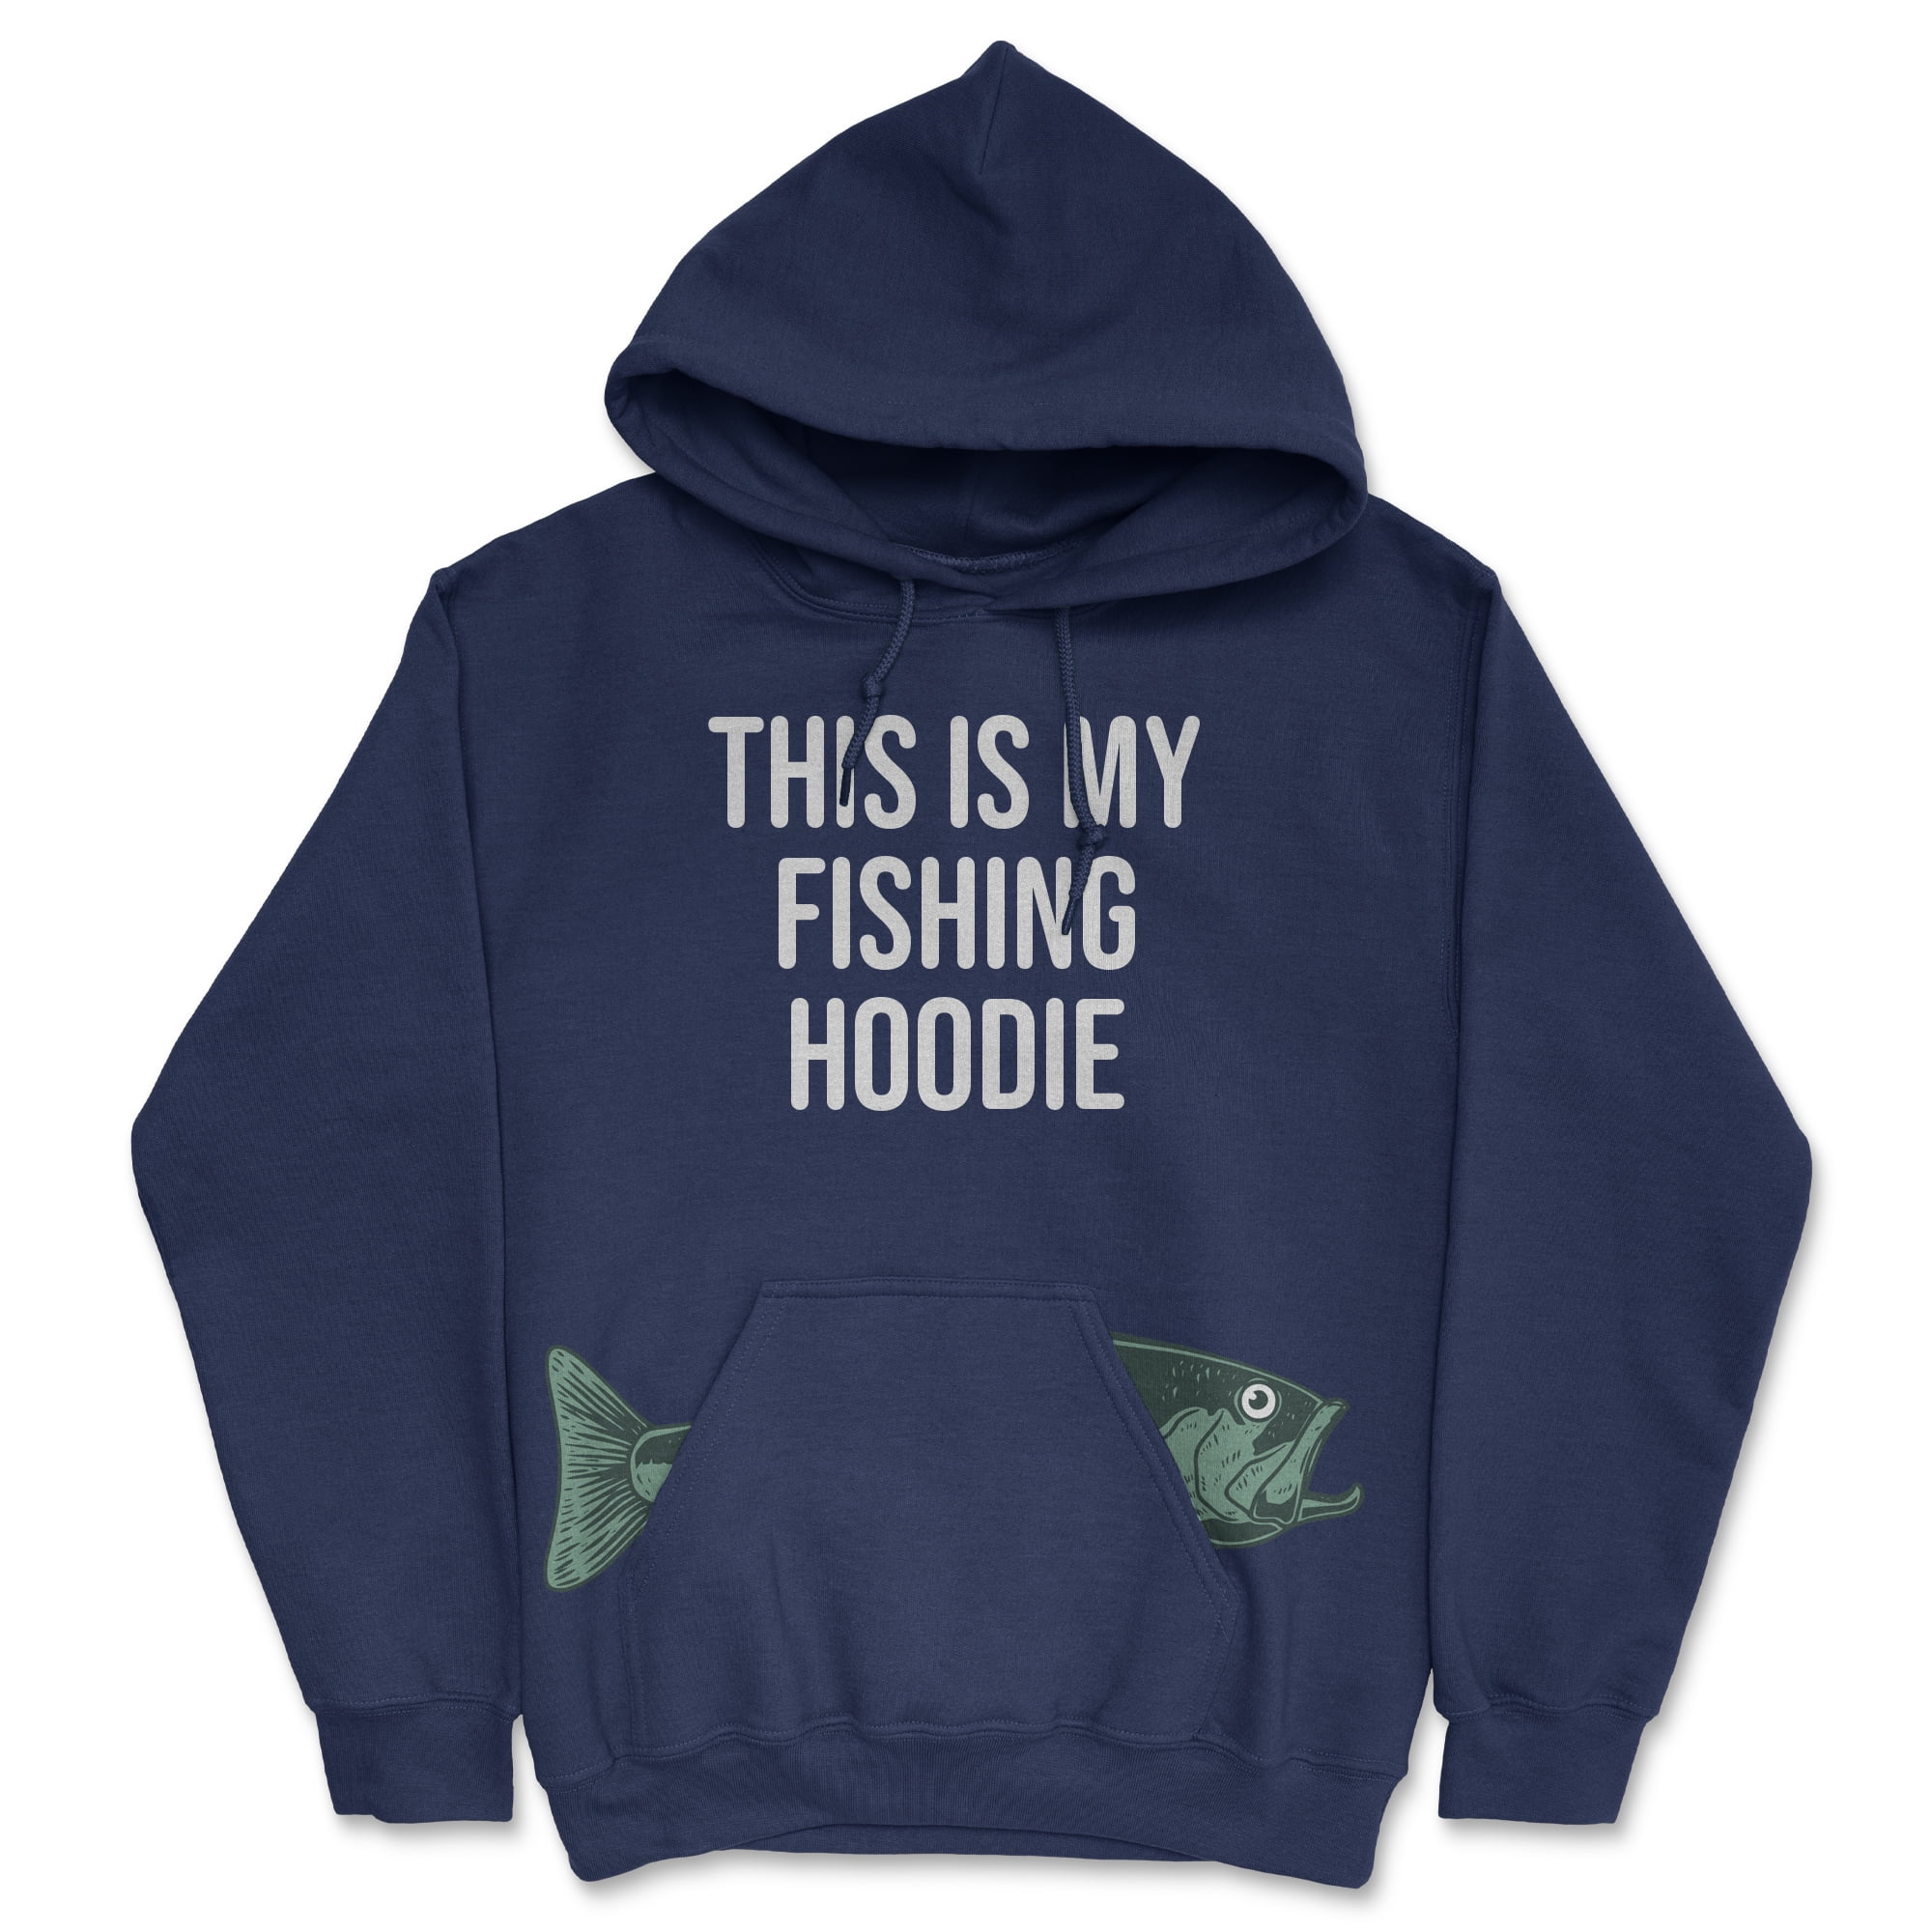 This Is My Fishing Hoodie Unisex Hooded Sweatshirt Funny Fishermen